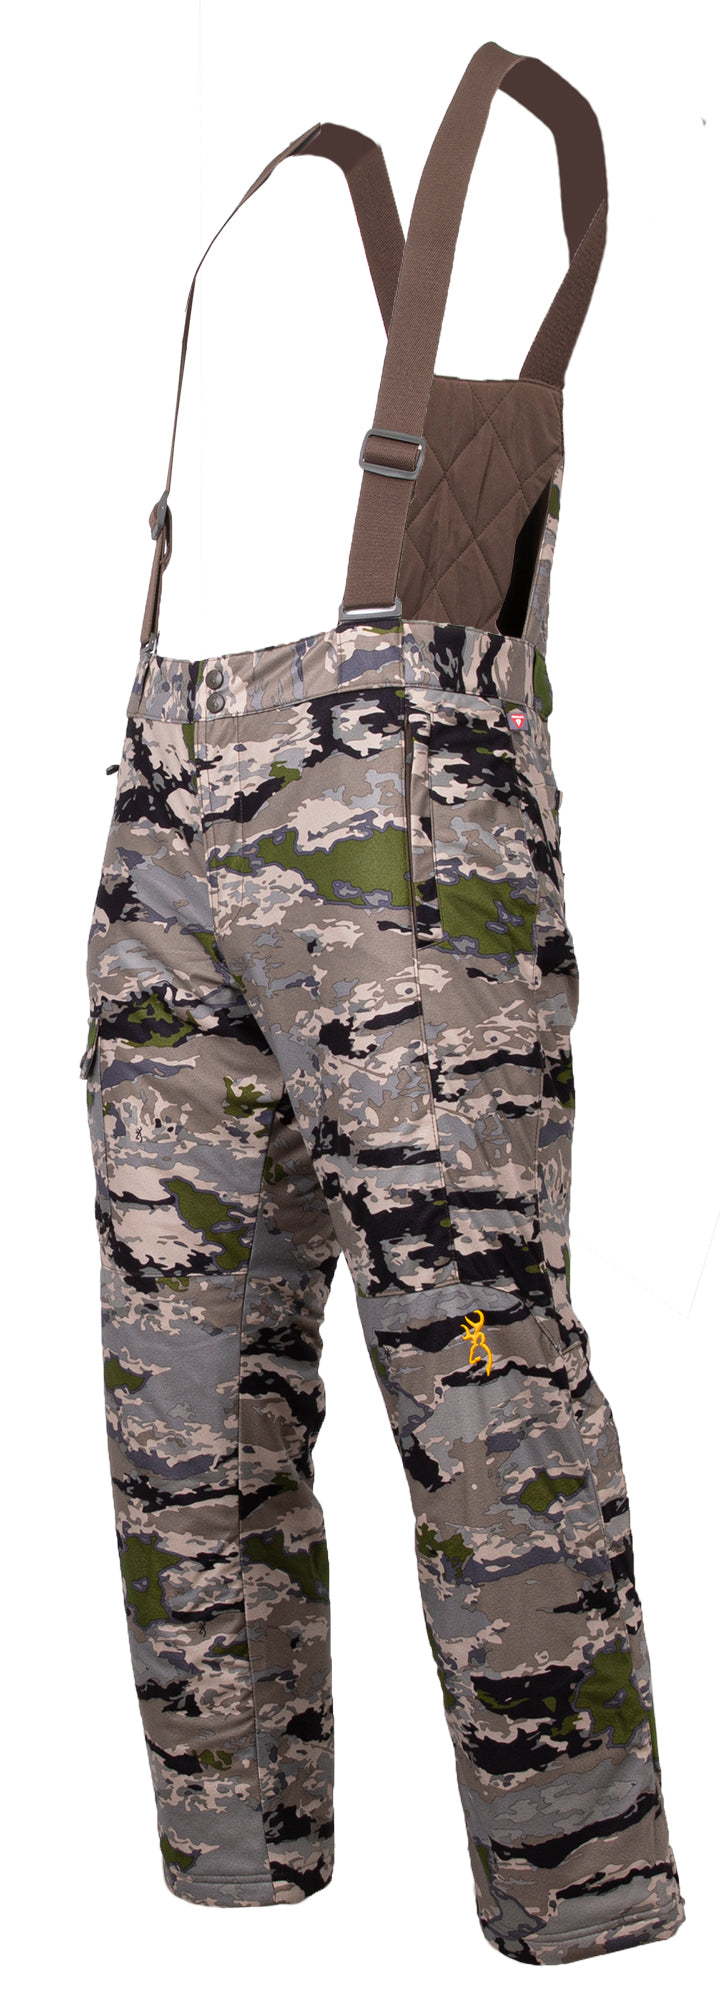 Browning "Ovix" insulated camo hunting pants